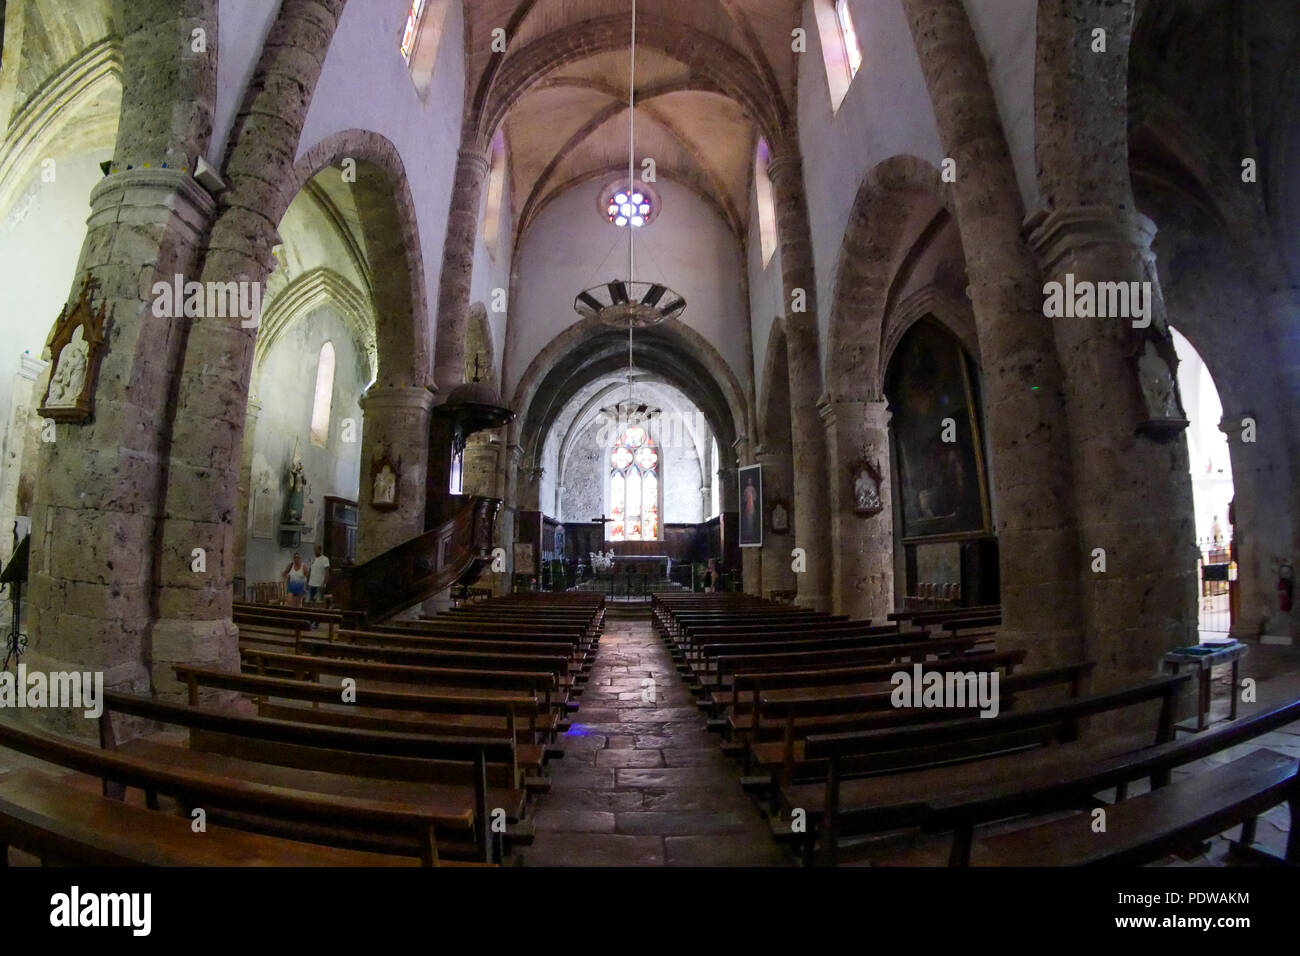 Saint-Marcel Feastday Church, Barjols, Var, France Stock Photo